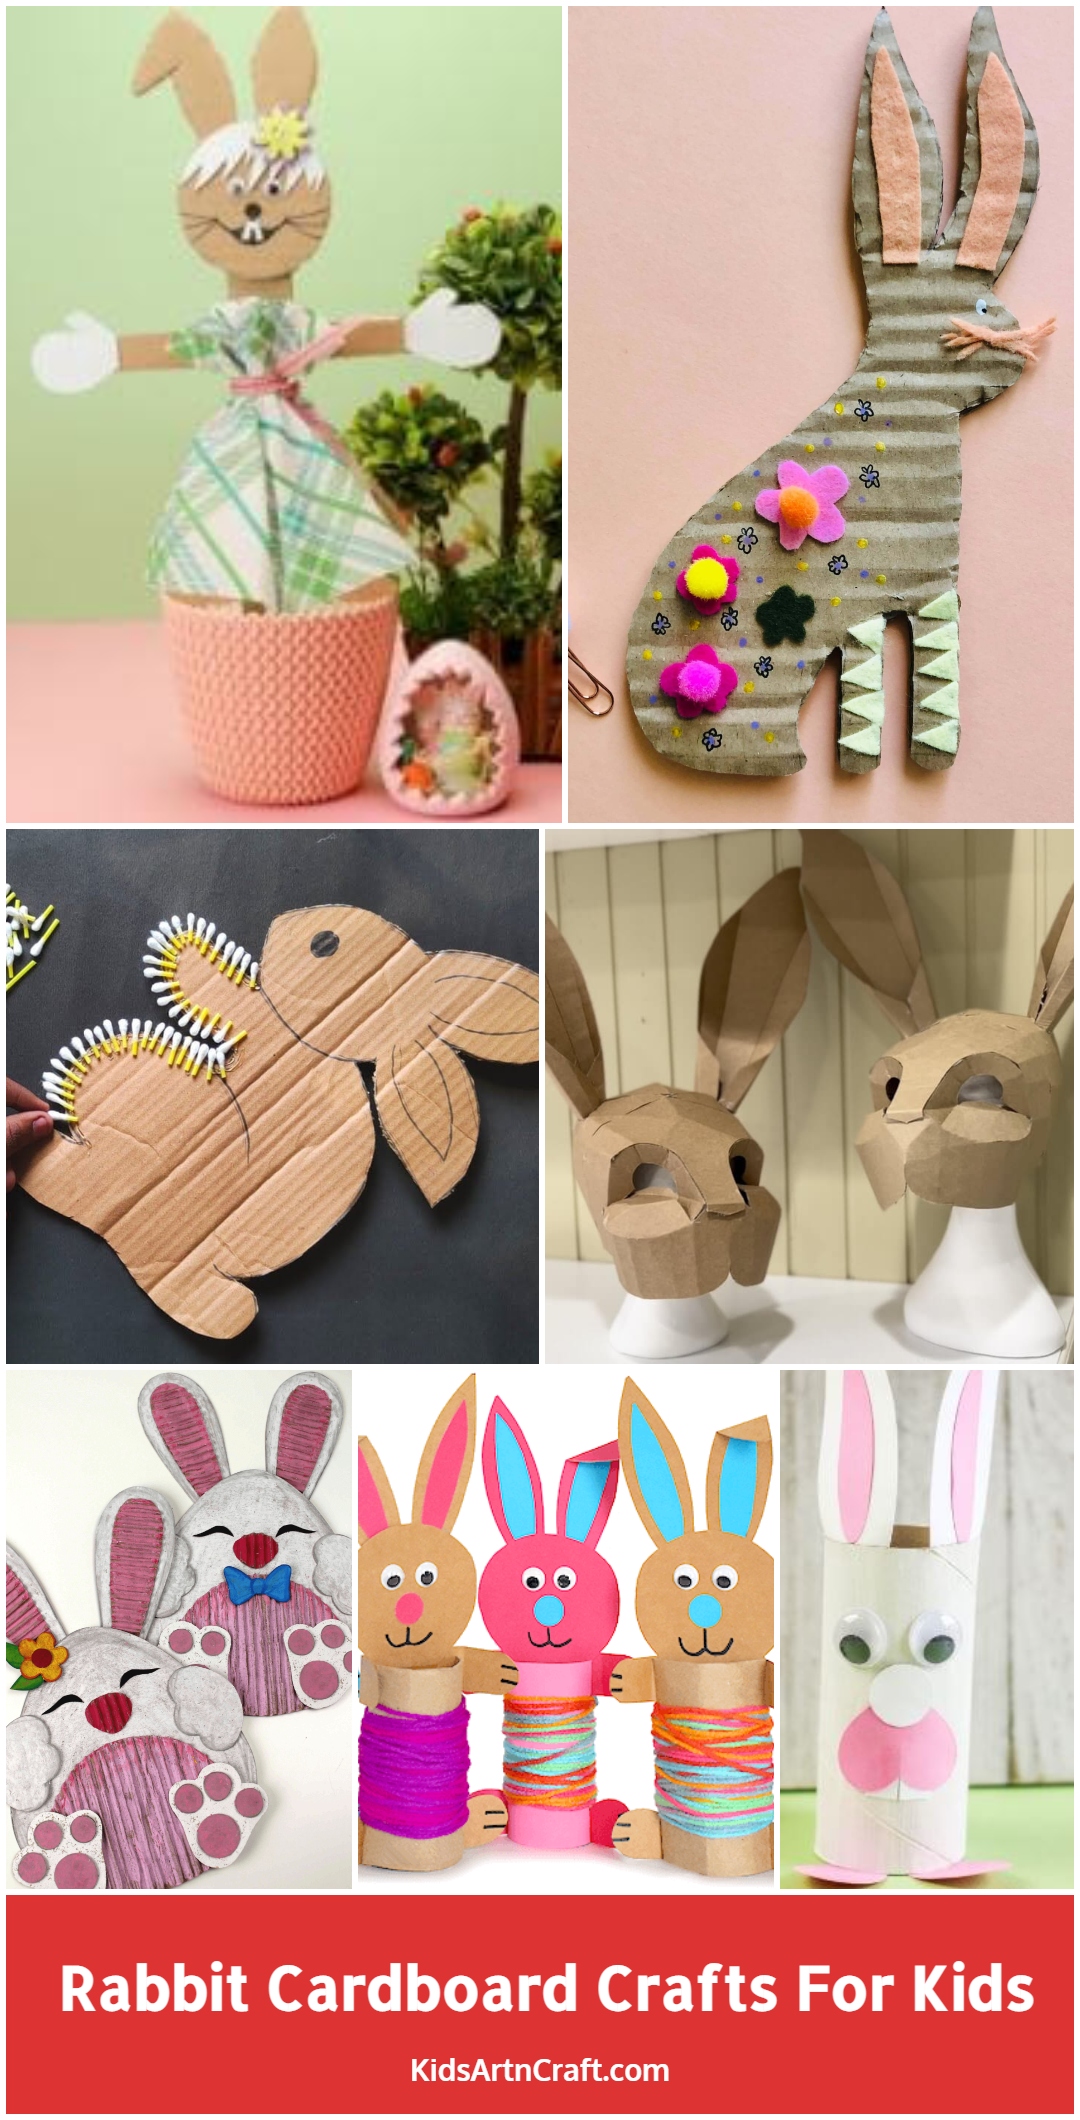 Rabbit Cardboard Crafts For Kids